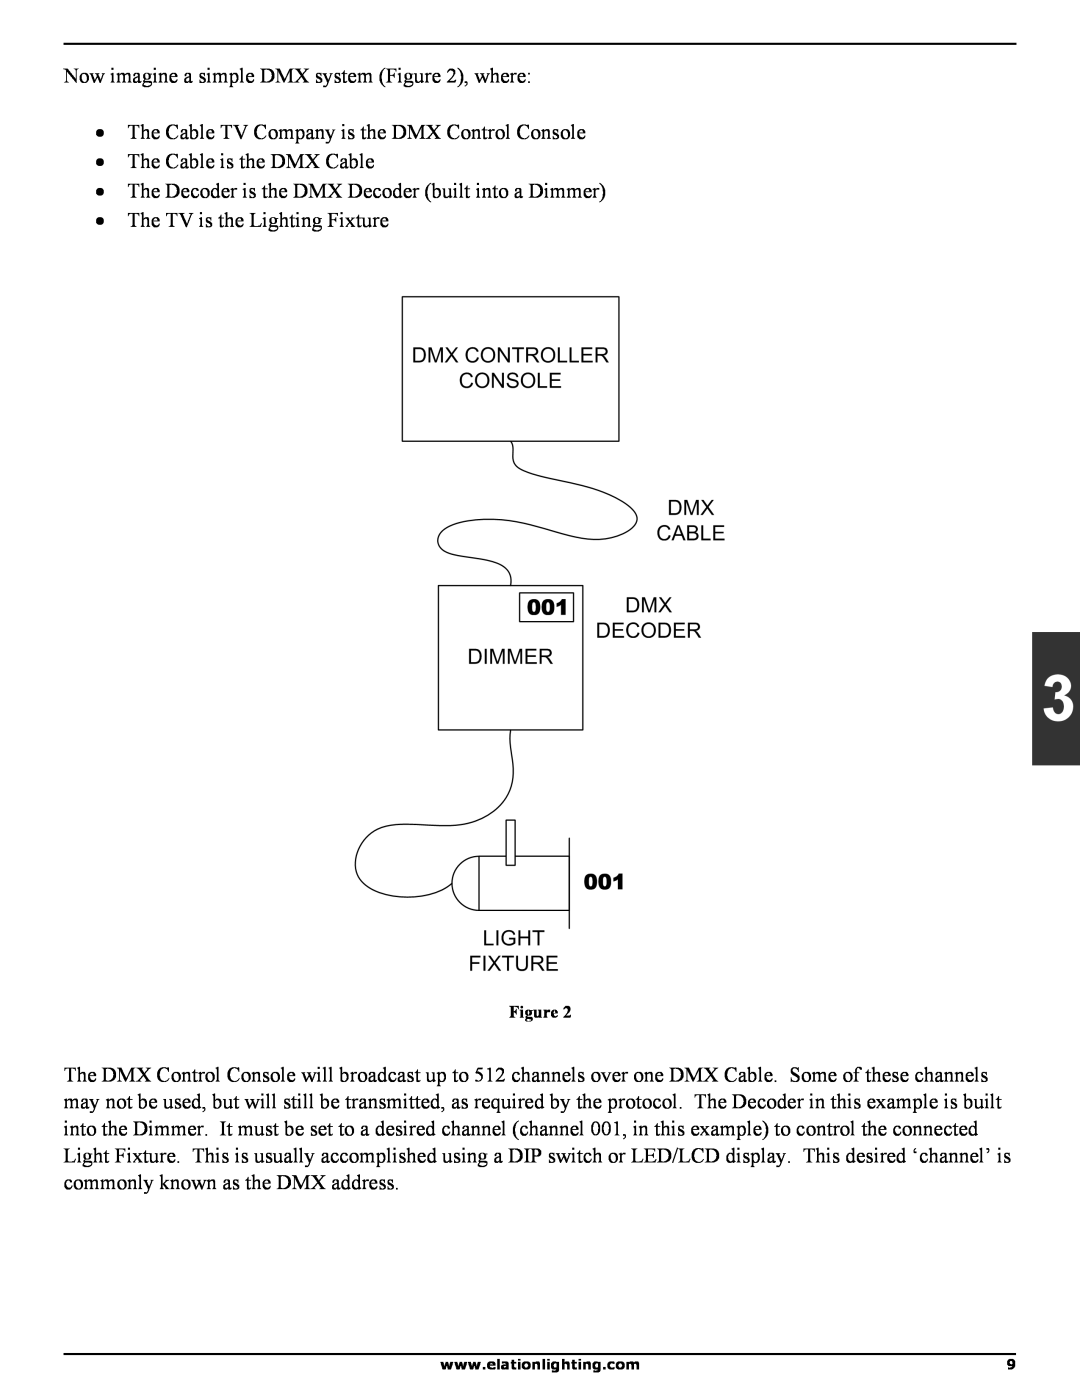 Elation Professional DMX 101 manual Now imagine a simple DMX system , where 